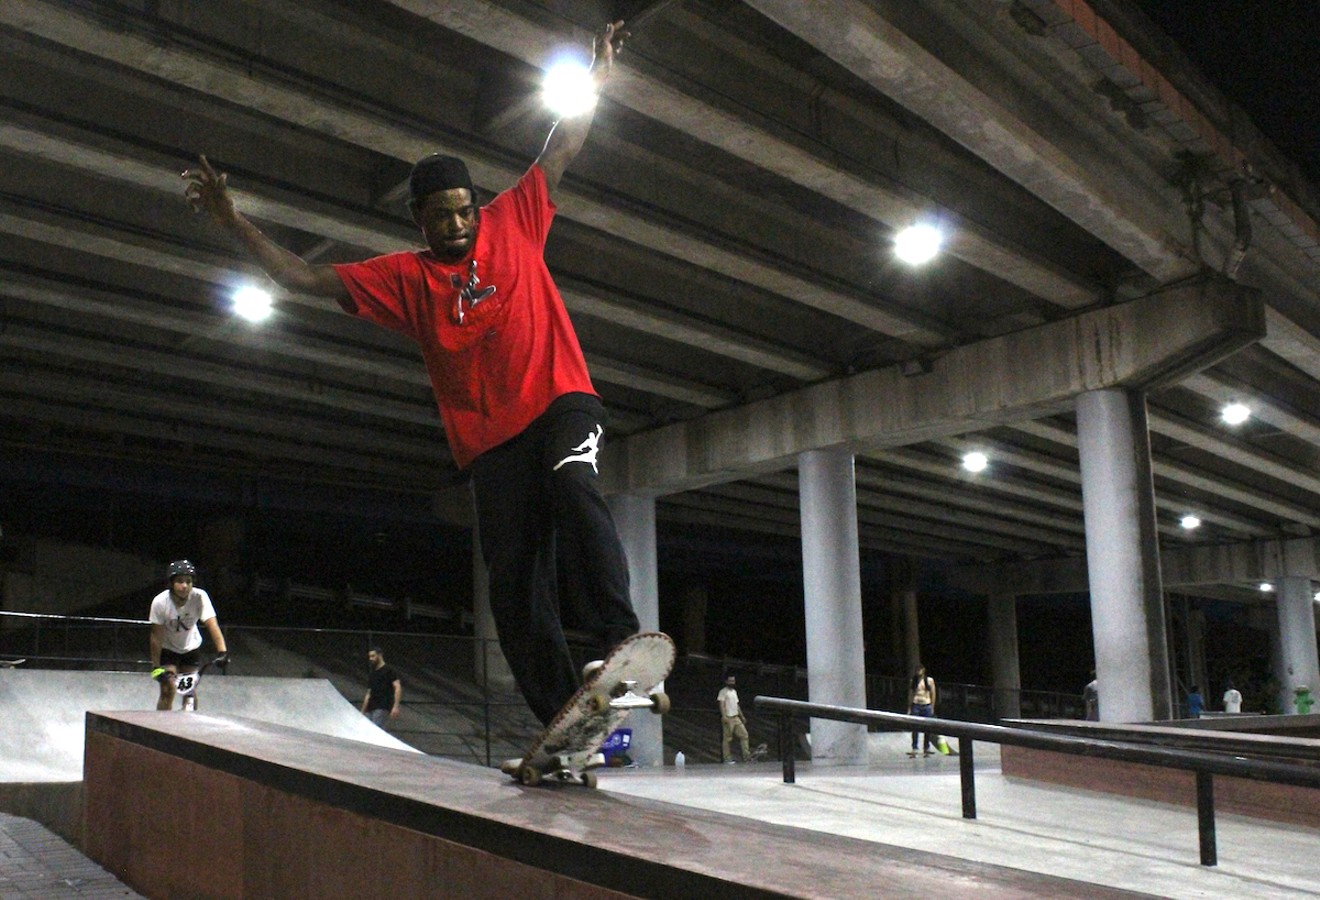 Miami skater Jordan Daley landing a freestyle trick at Lot 11 Skatepark.